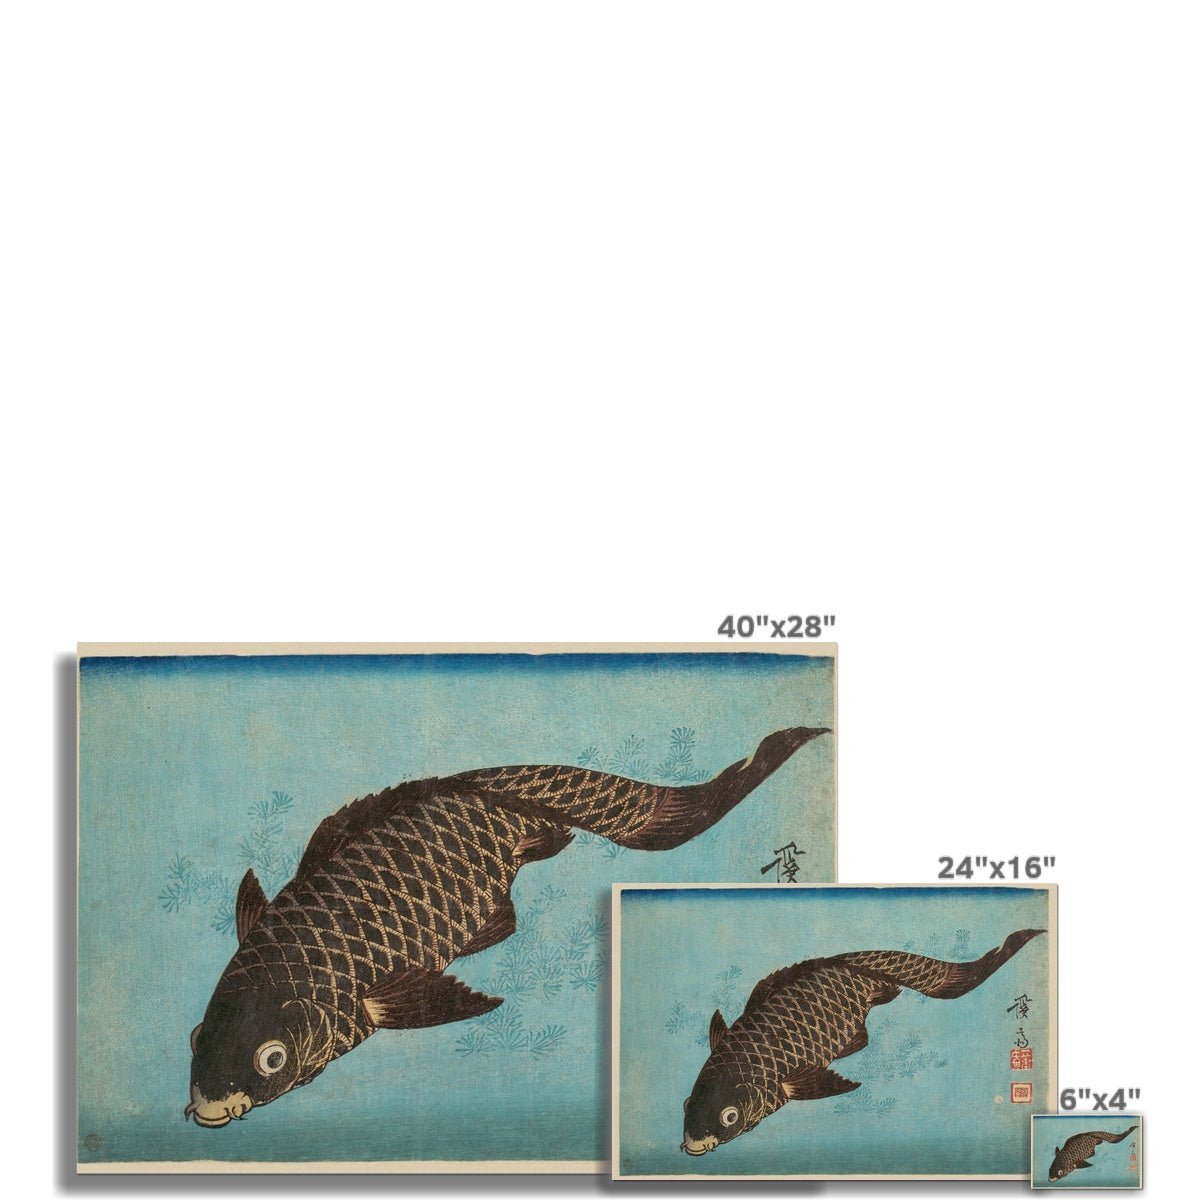 giclee 6"x4" Keisai Eisen Japanese Woodblock Koi, Carp, Ukiyo-e Marine Life Antique Fine Art Print